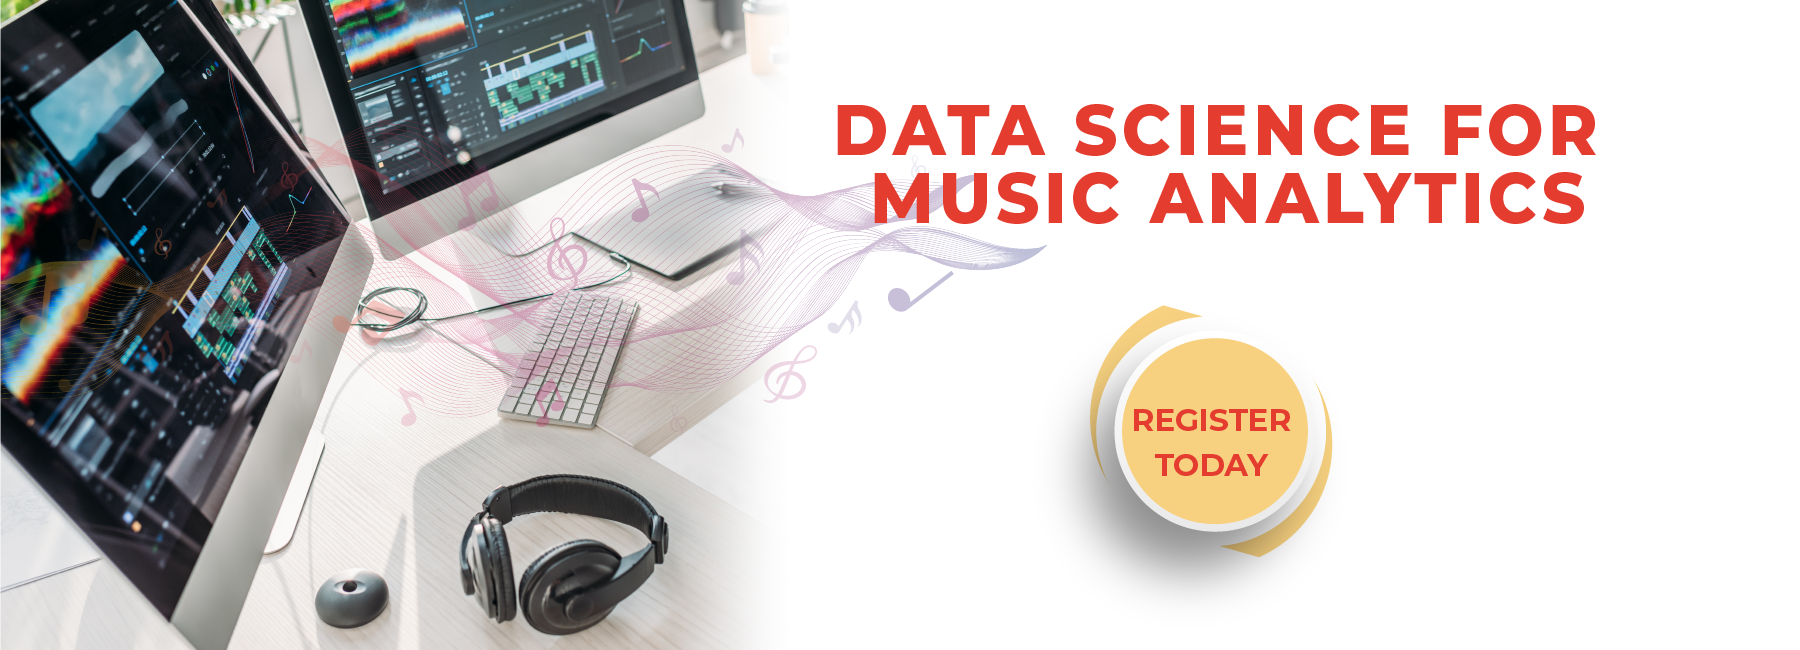 Data-Science-for-Music-Analytics-1